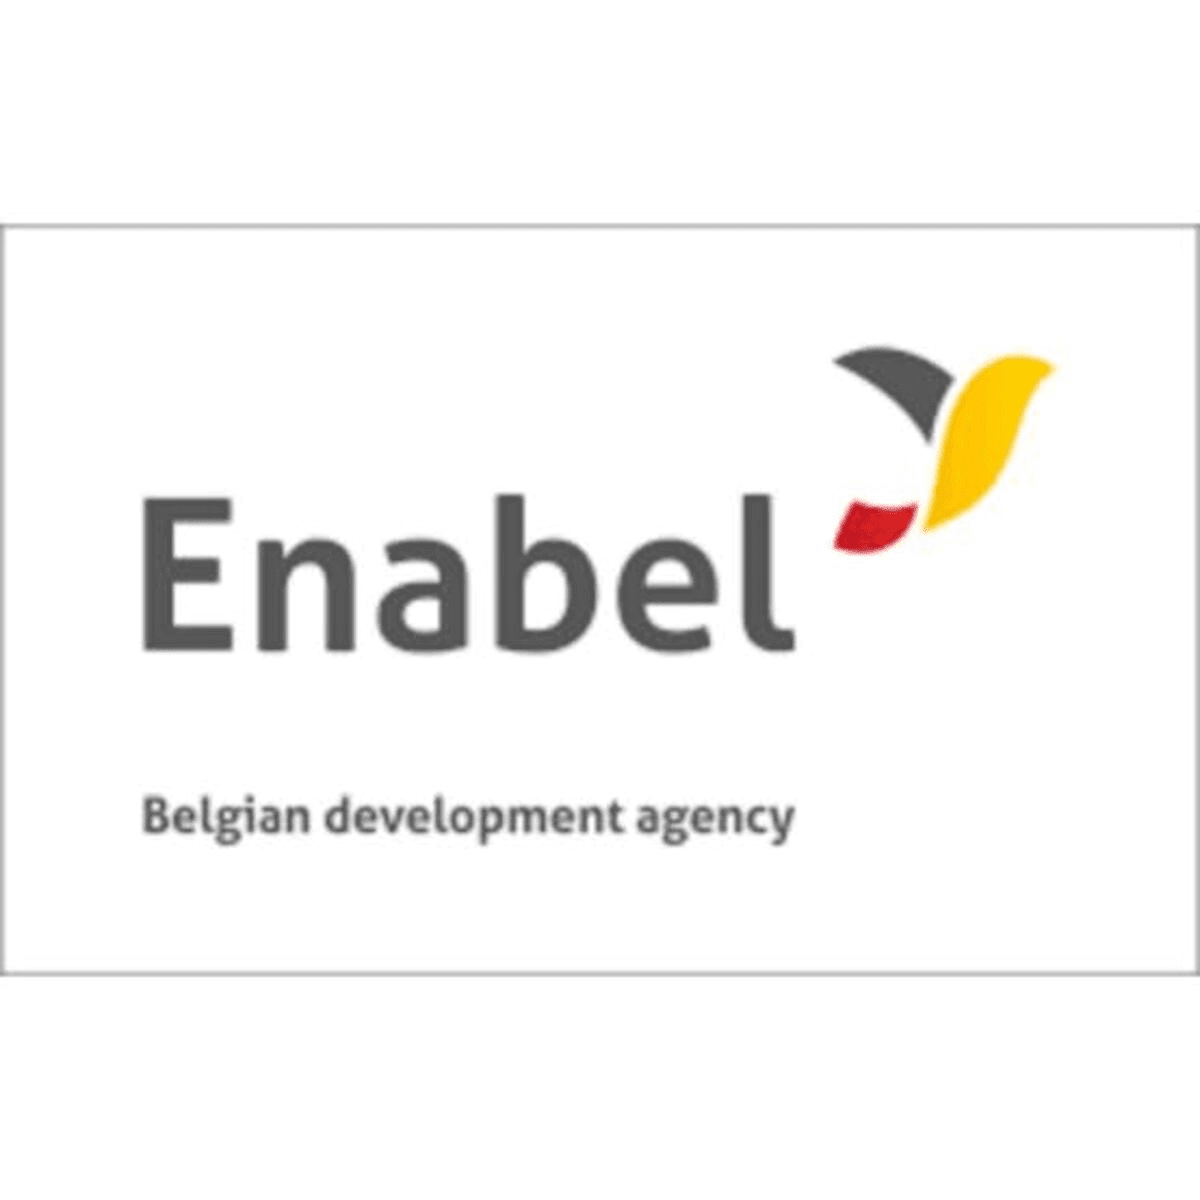 Nafasi za kazi Belgian Development Agency ENABEL 2022, Job Vacancy at Enabel Tanzania 2022, Enabel - Belgian Development Agency Jobs in Tanzania 2022